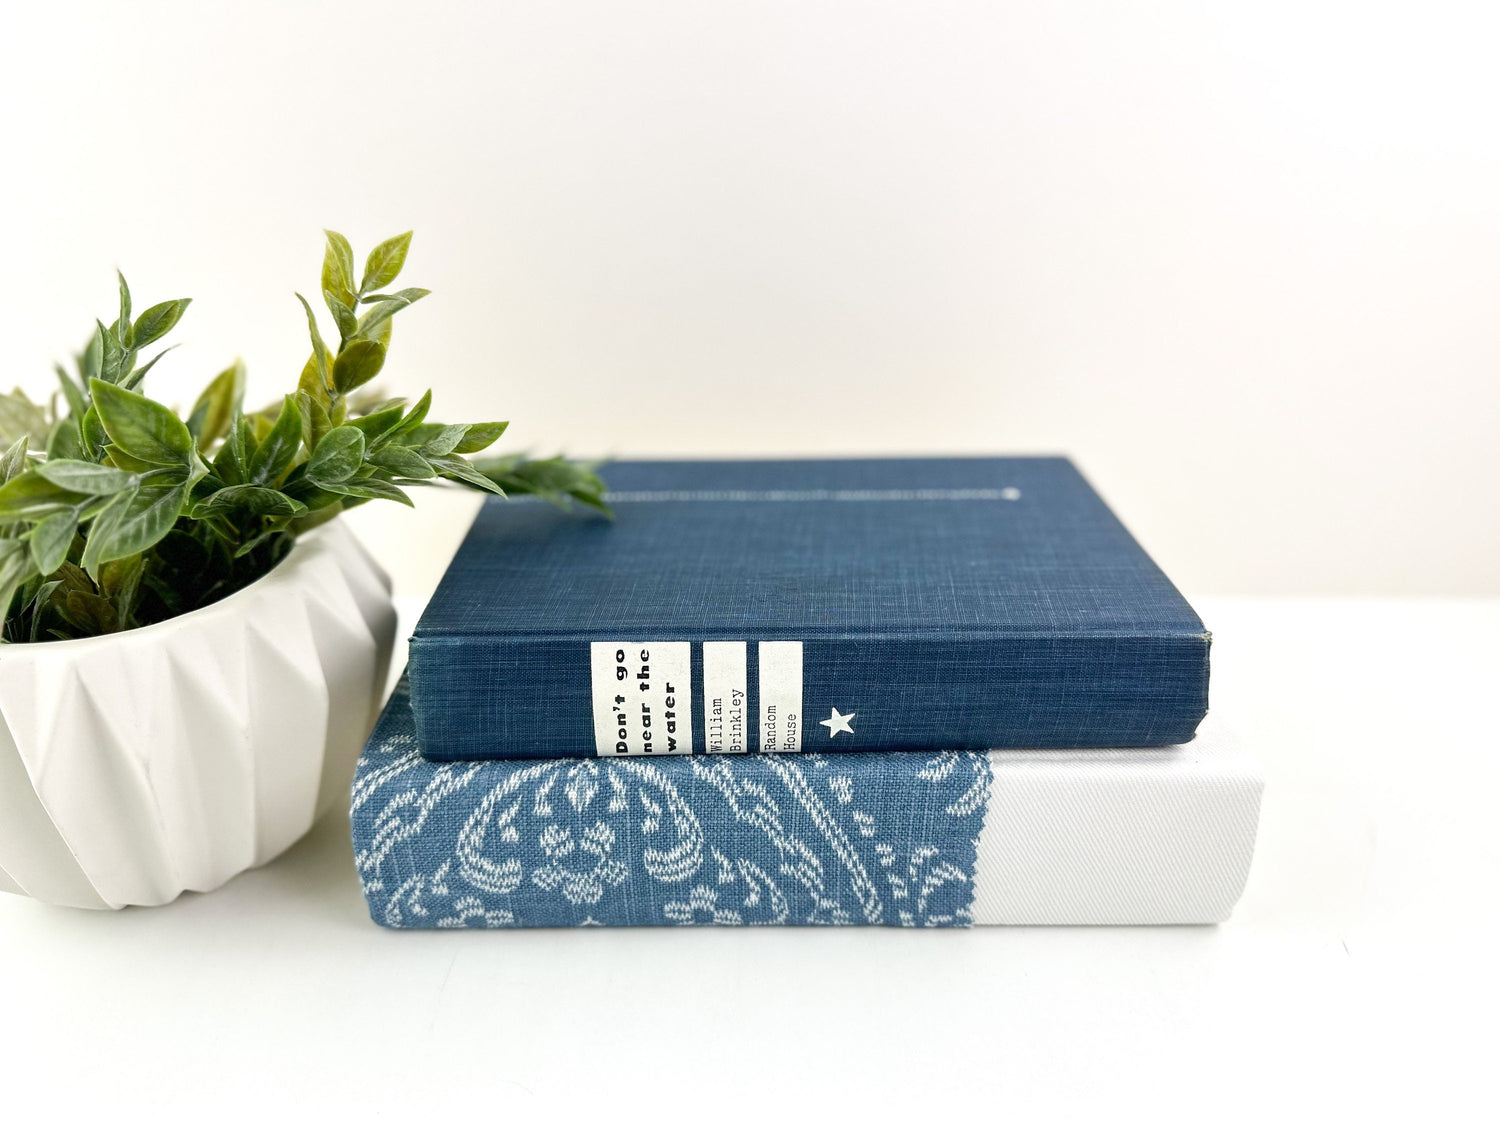 Blue Decorative Book Set